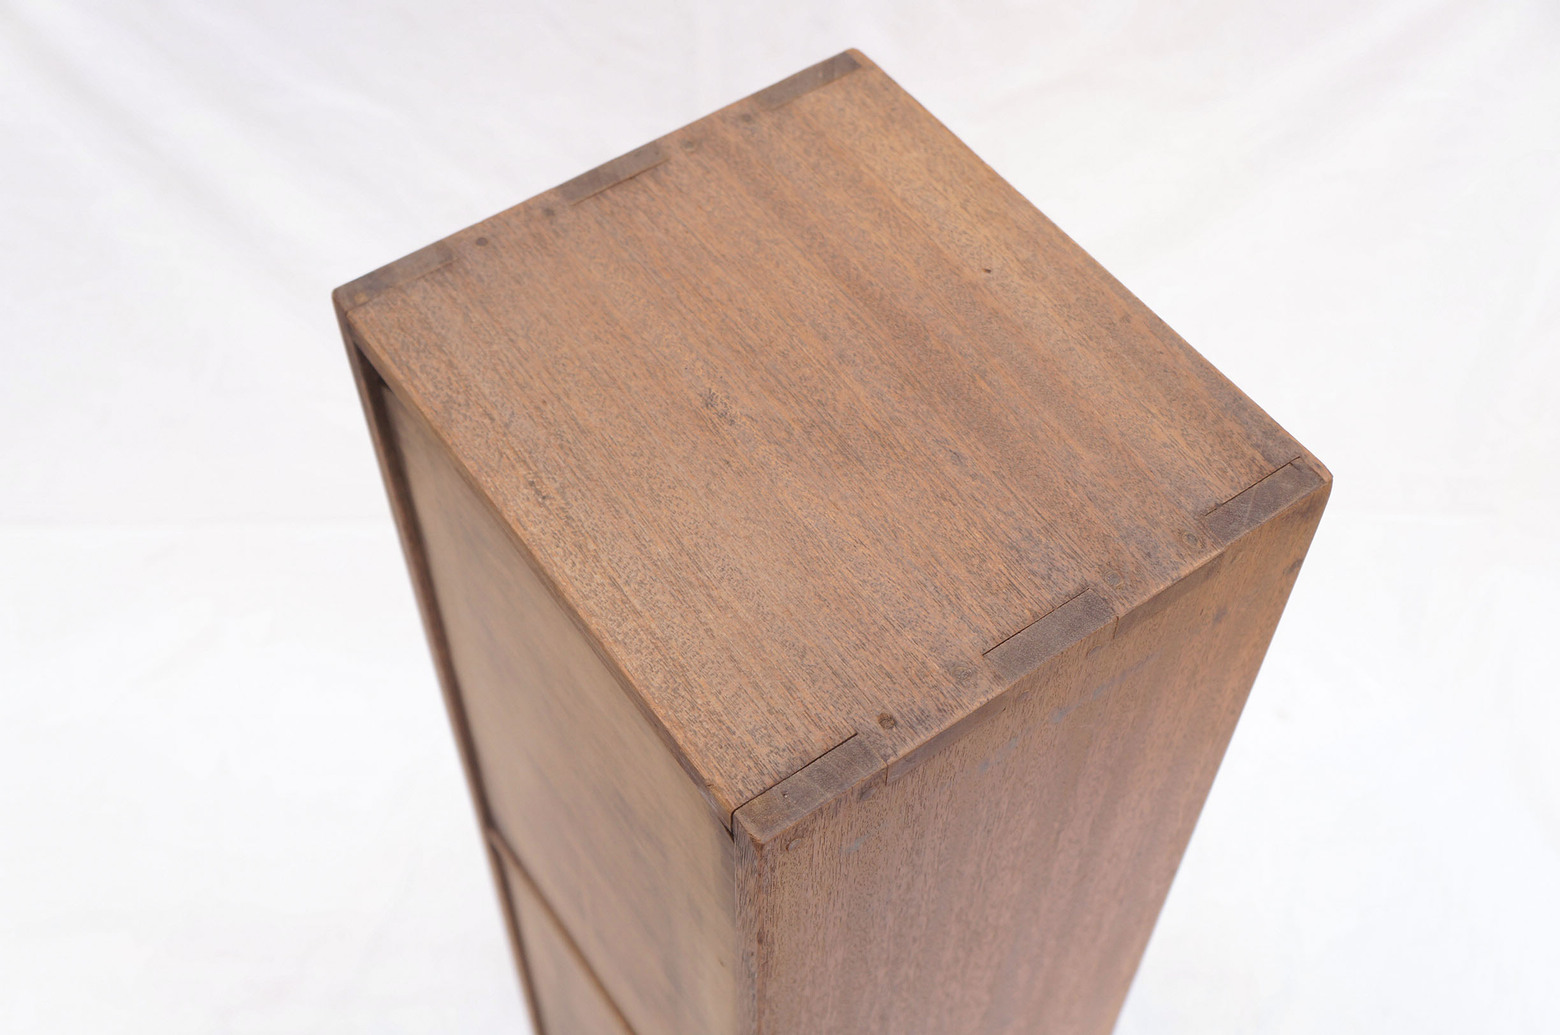 Japanese Vintage Wooden Box Shelf/ジャパンヴィンテージ ボックスシェルフ 木箱 収納ボックス レトロ シャビー 大 9